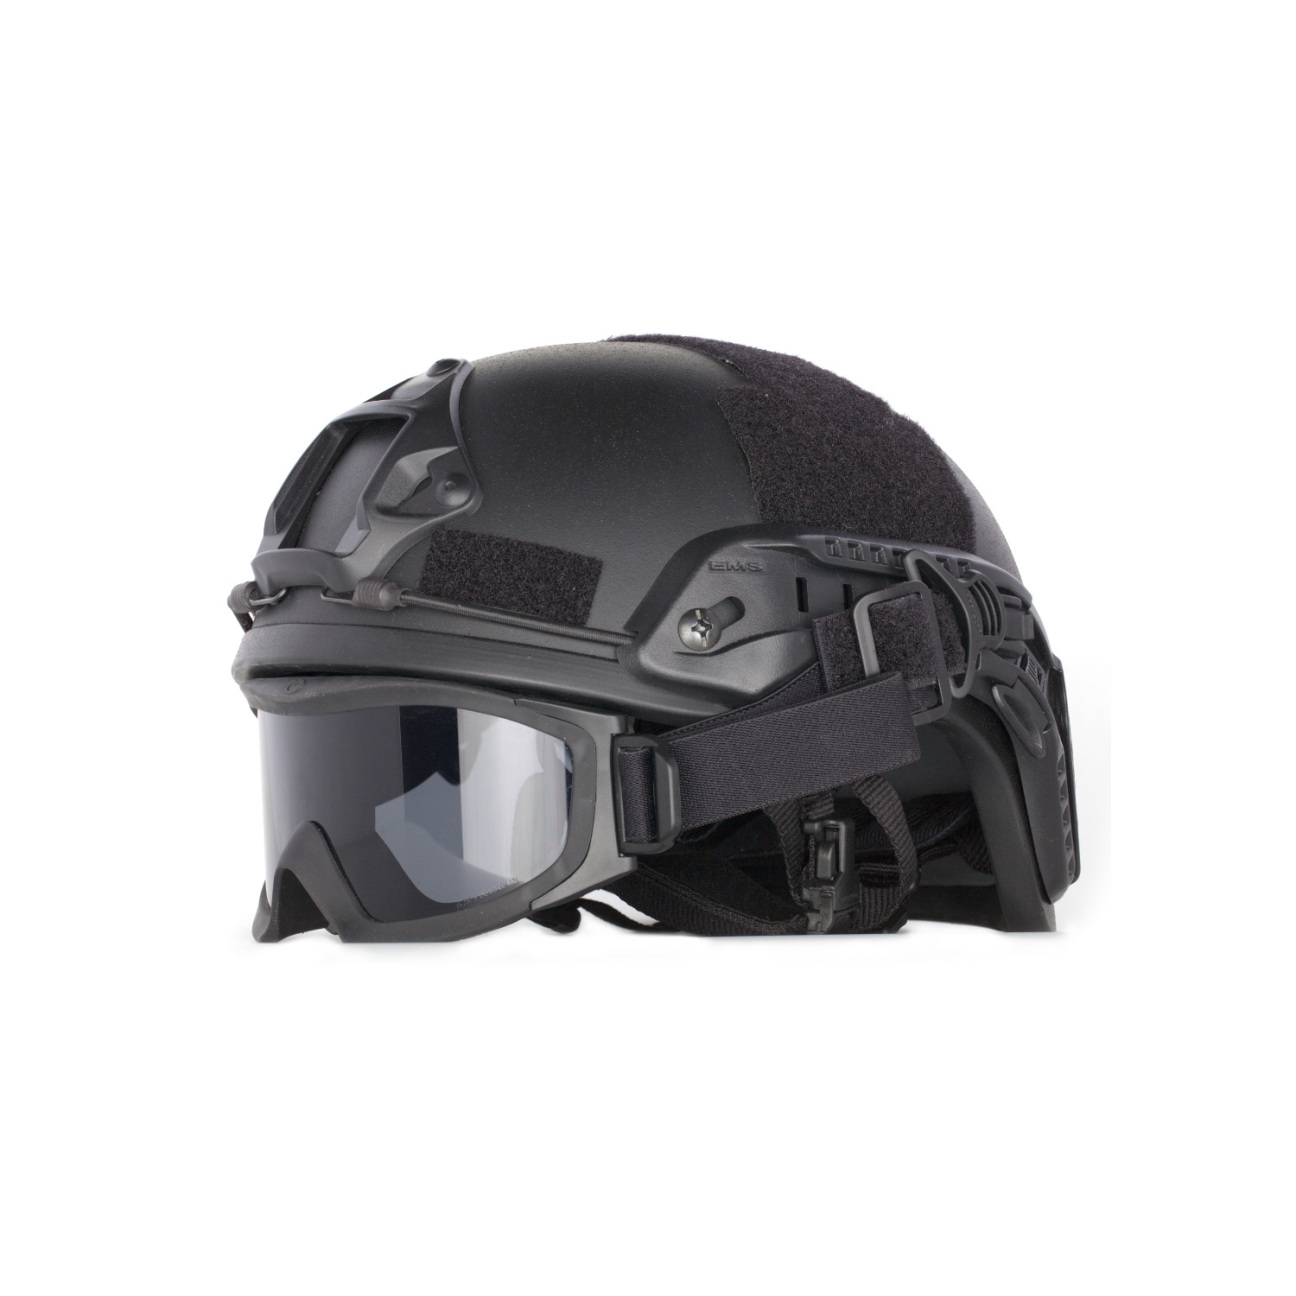 Ballistic Helmet And Tactical Goggles Bundle For Sale Boltless High Cut Level Iv Ballistic Helmets